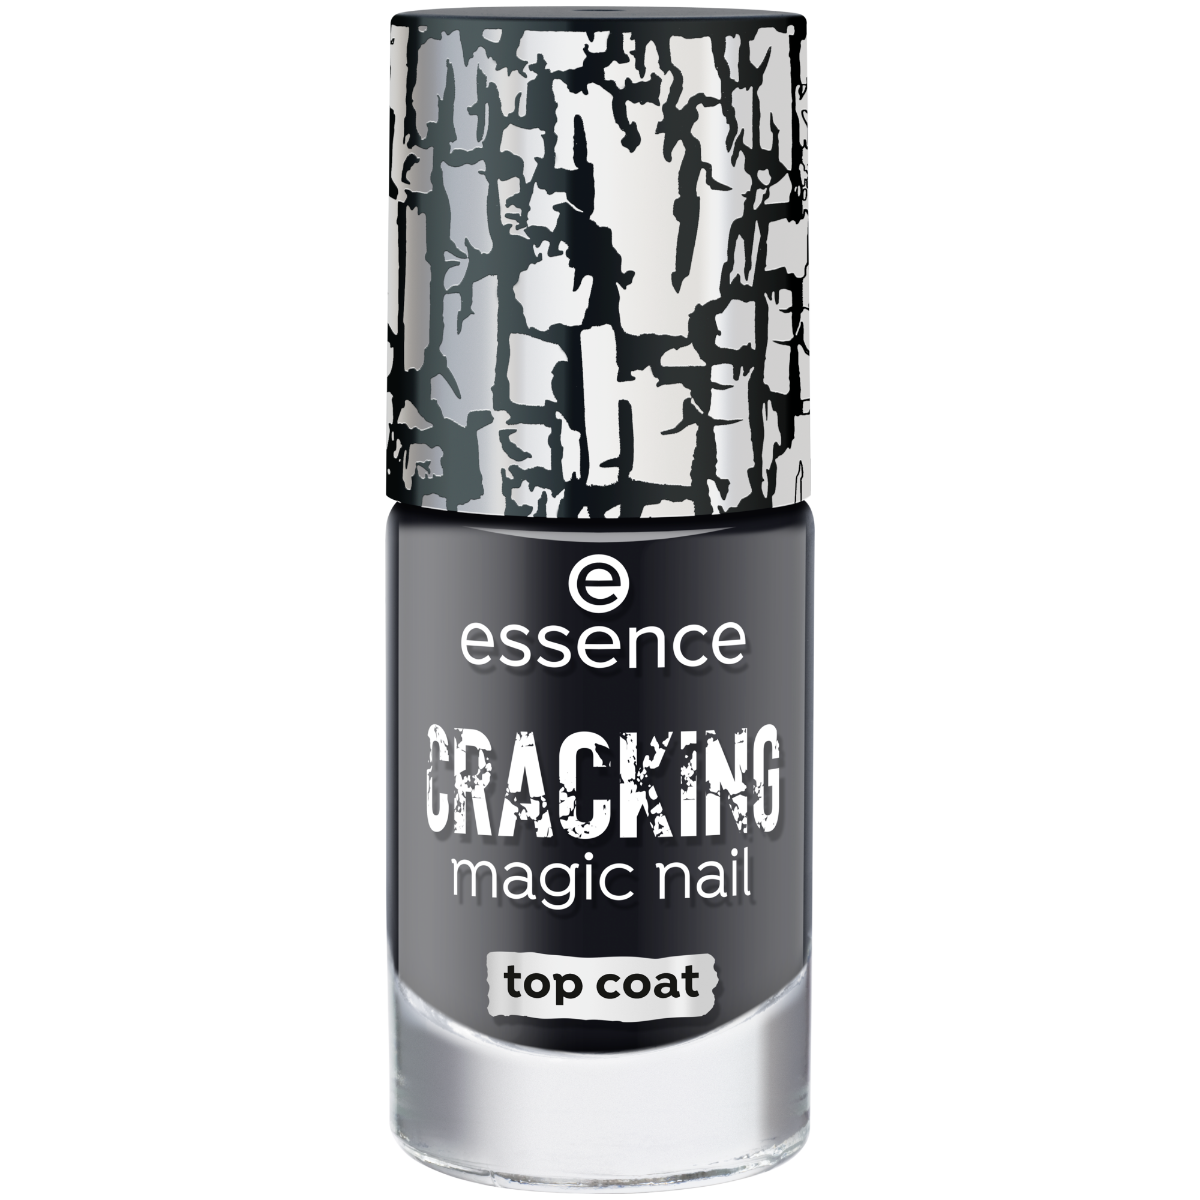 Essence Cracking - magic nail top coat 01 8ml